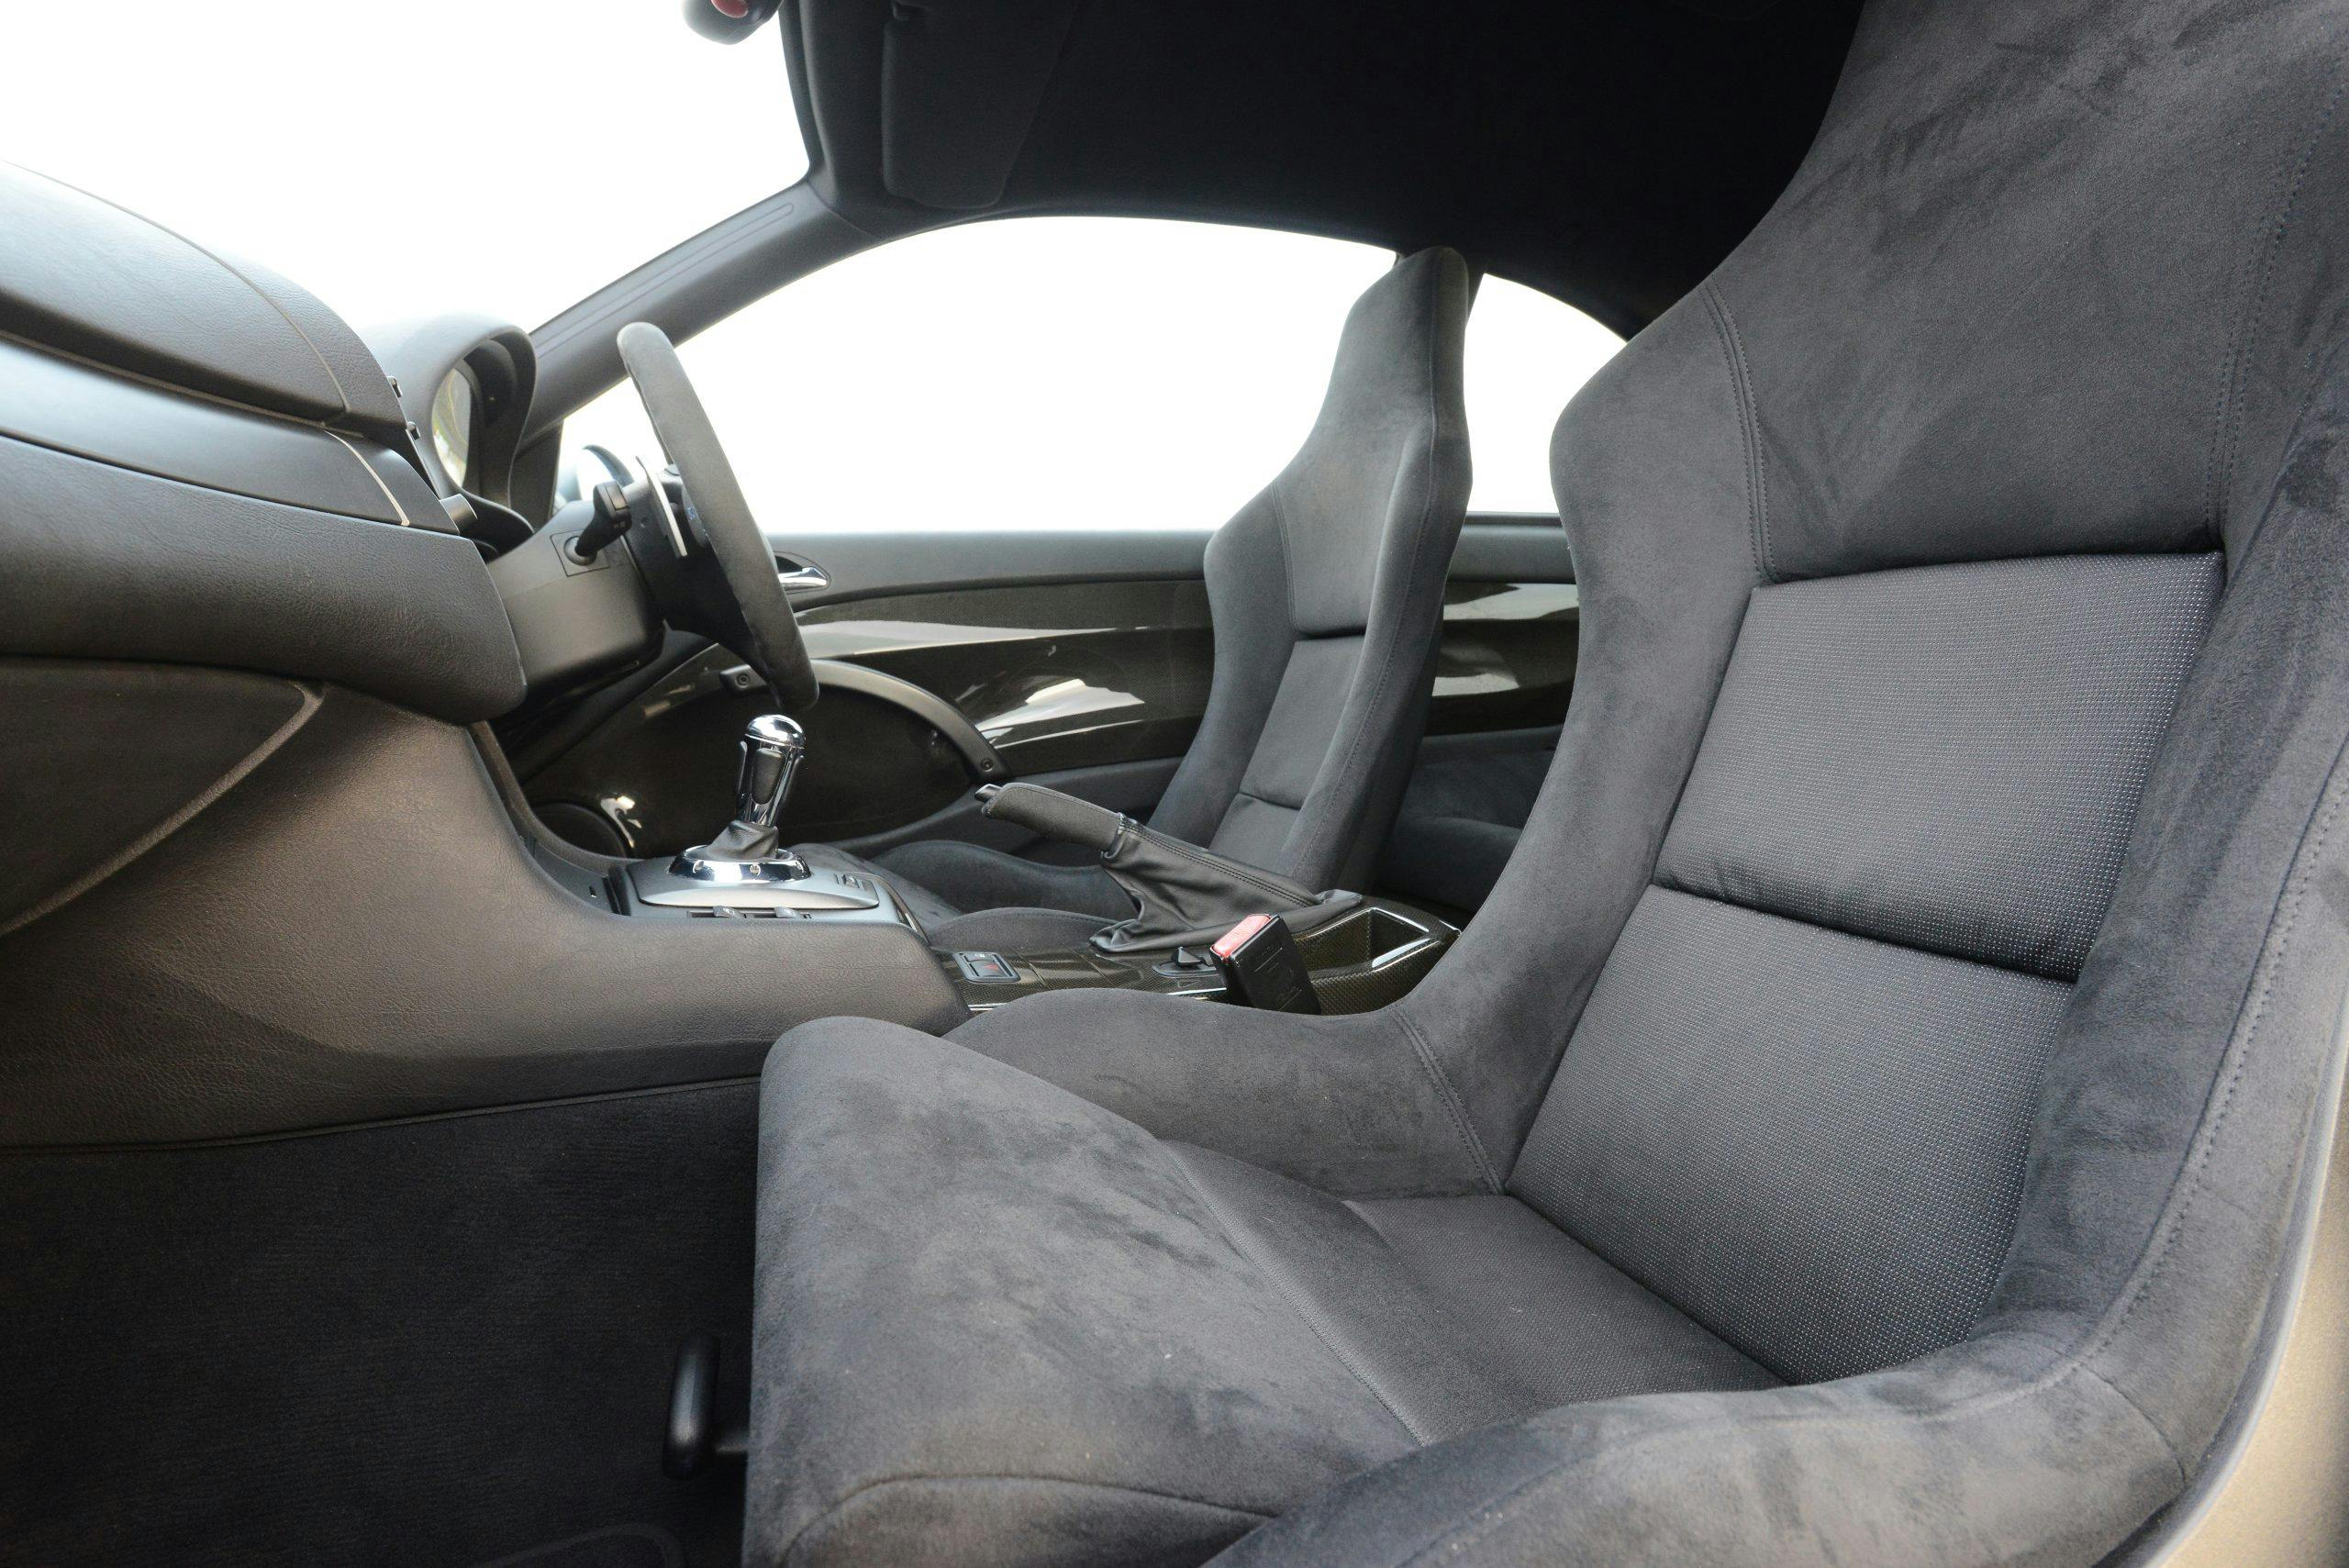 BMW M3 CSL interior front seats